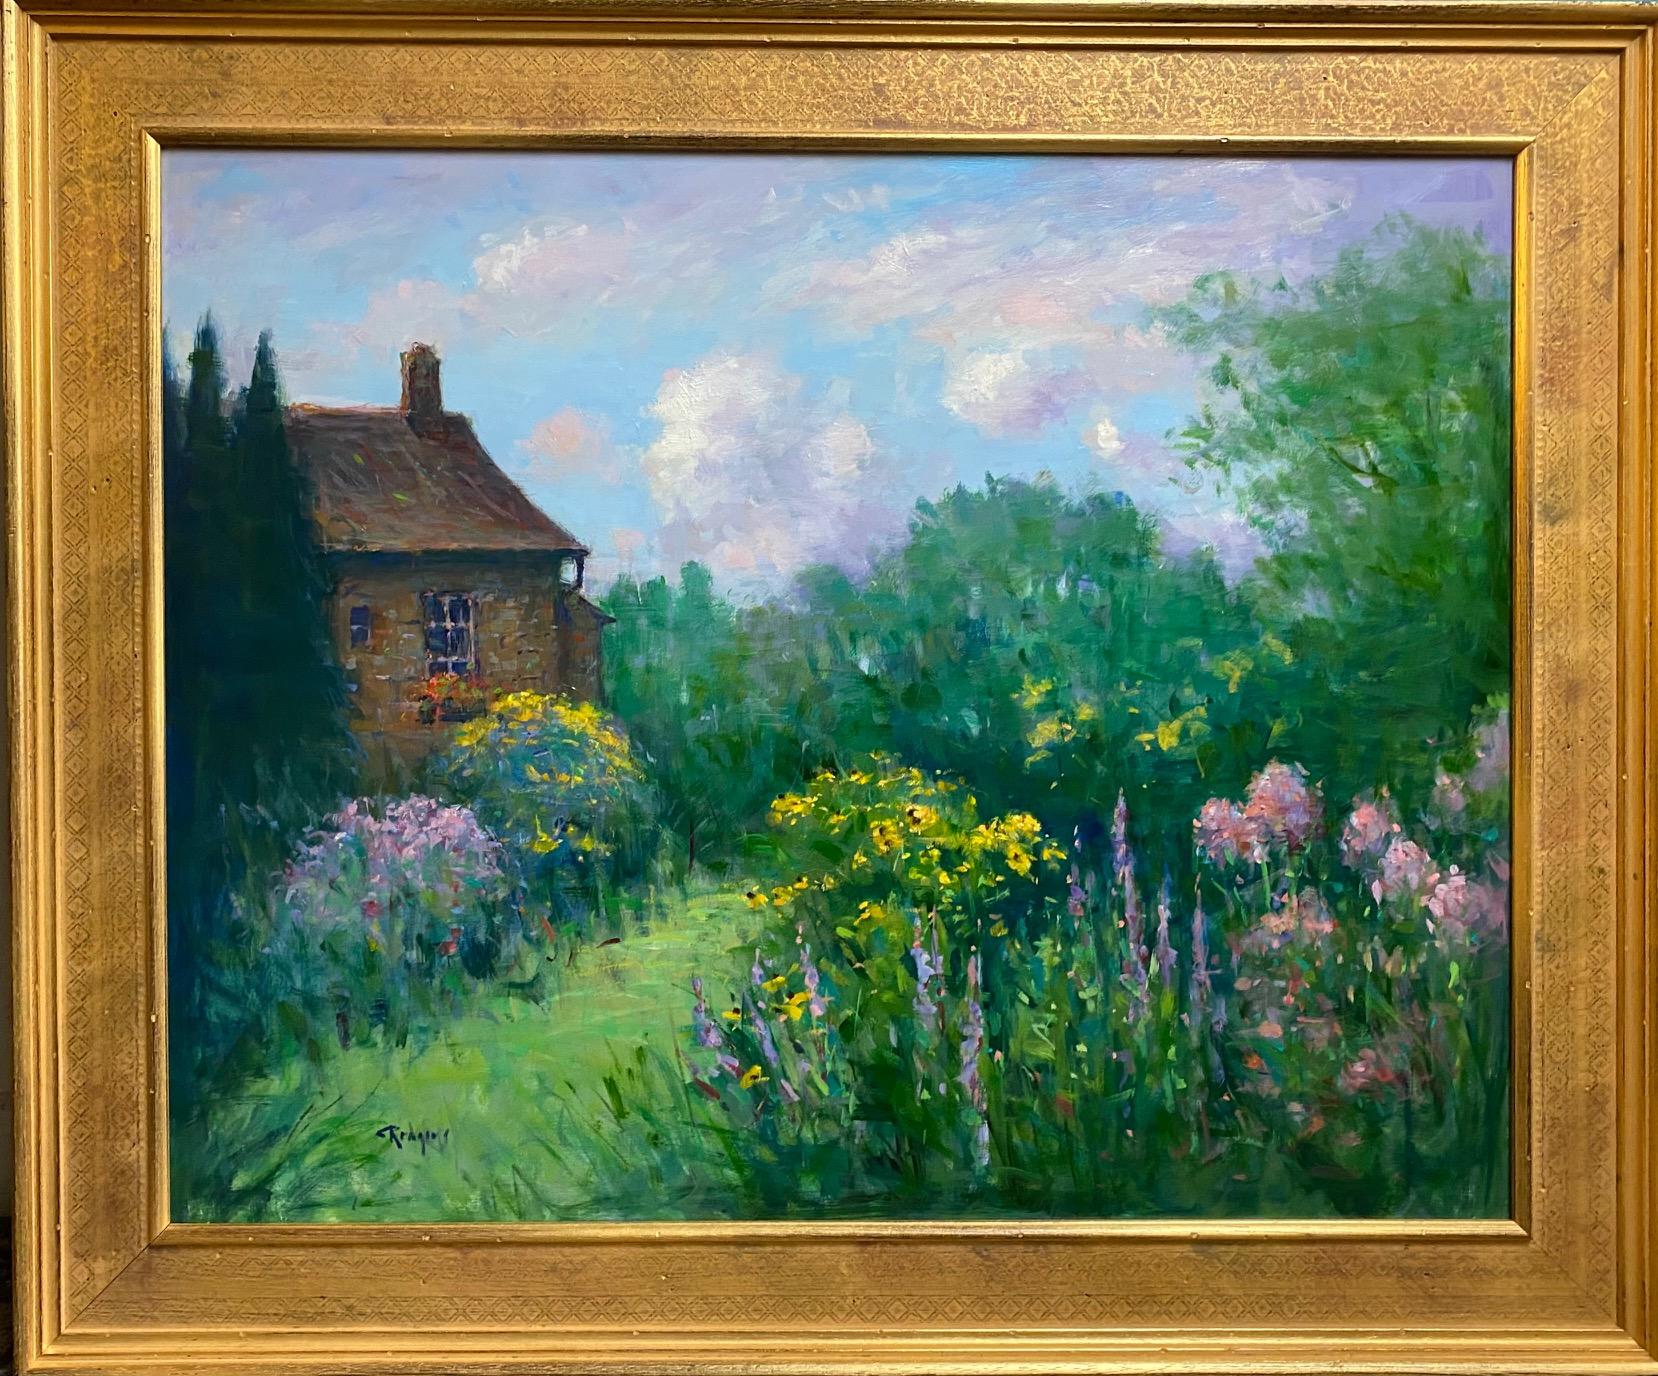 Jim Rodgers Landscape Painting - English Garden, original 24x30 impressionist landscape